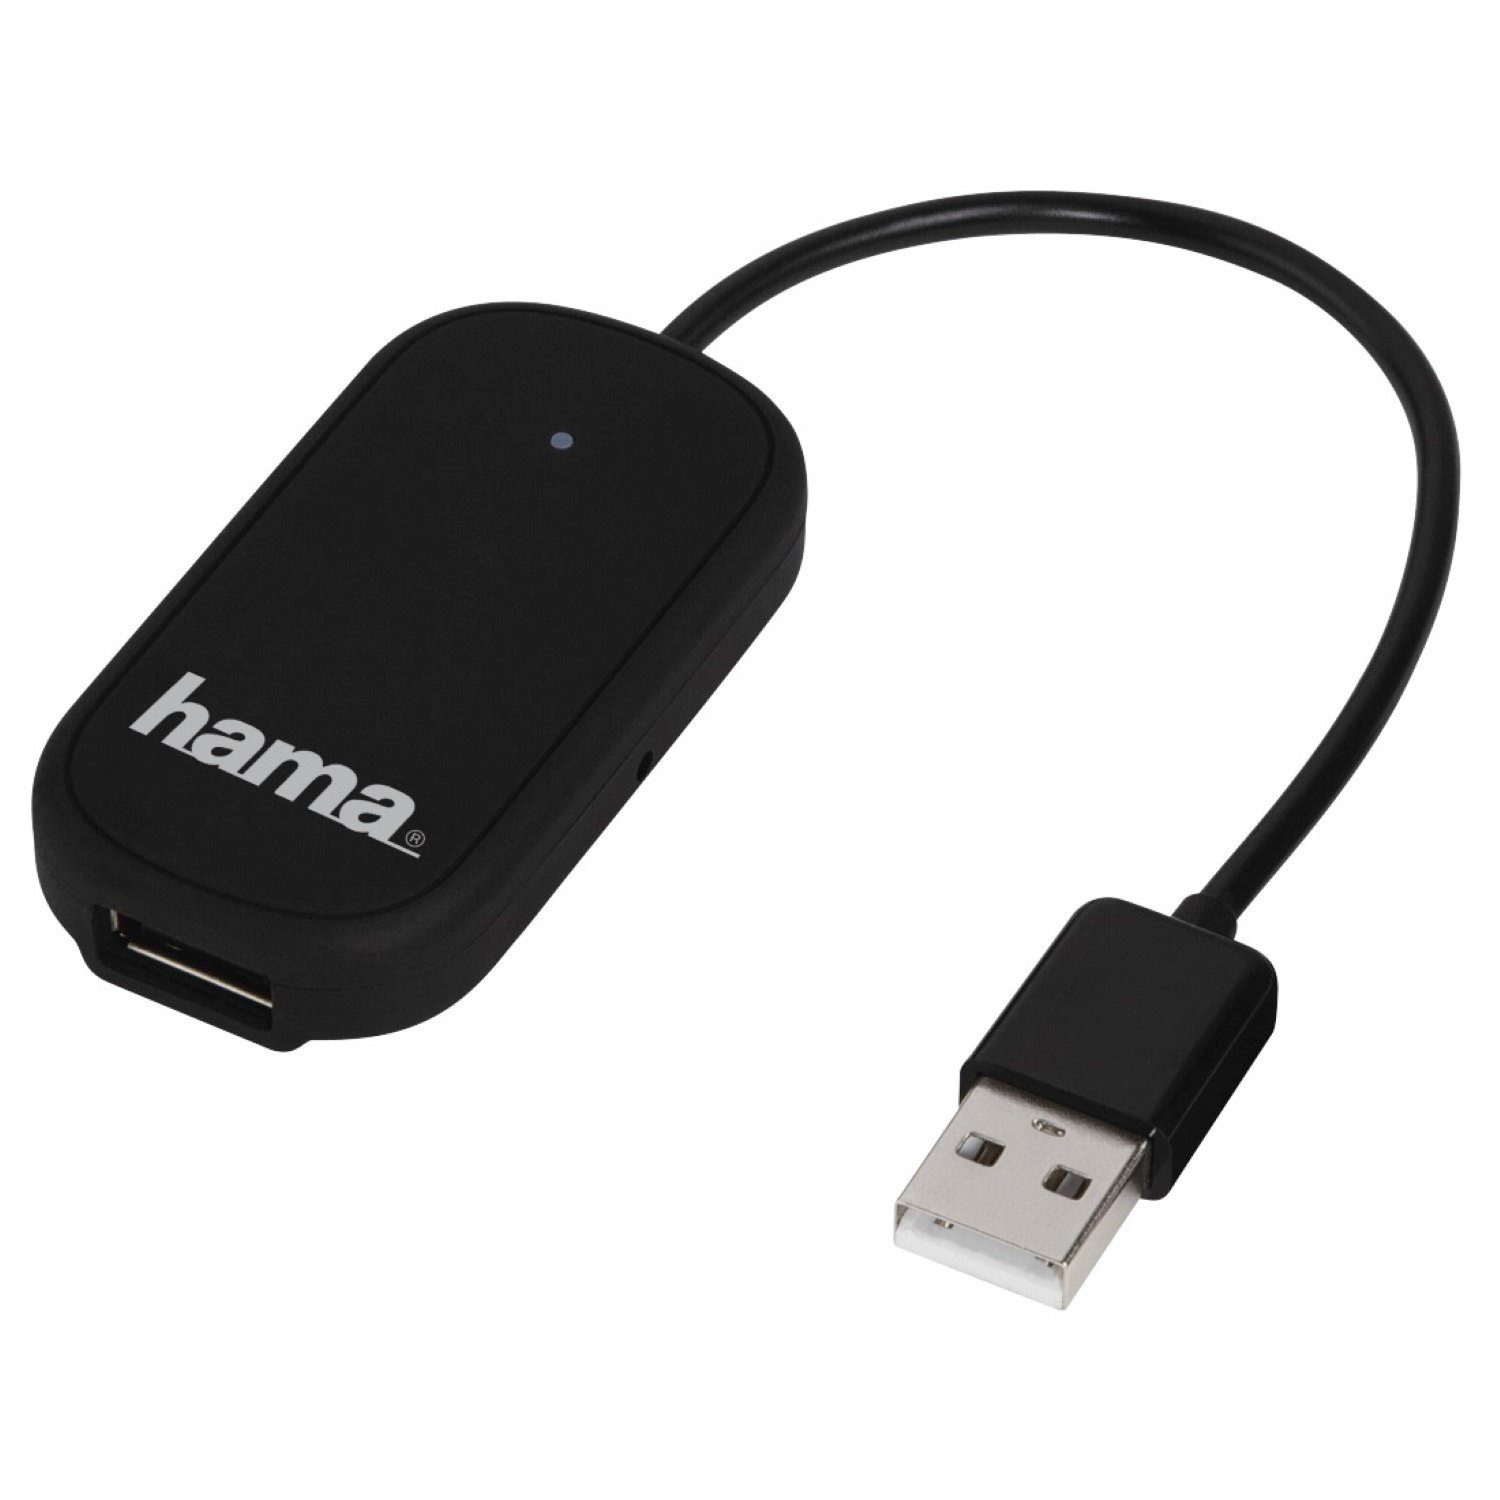 Hama USB NAS WLAN Adapter WiFi Reader USB-Adapter USB-A, USB-Stick, Datenleser für Notebook, Laptop, Handy, Tablet, PC, etc